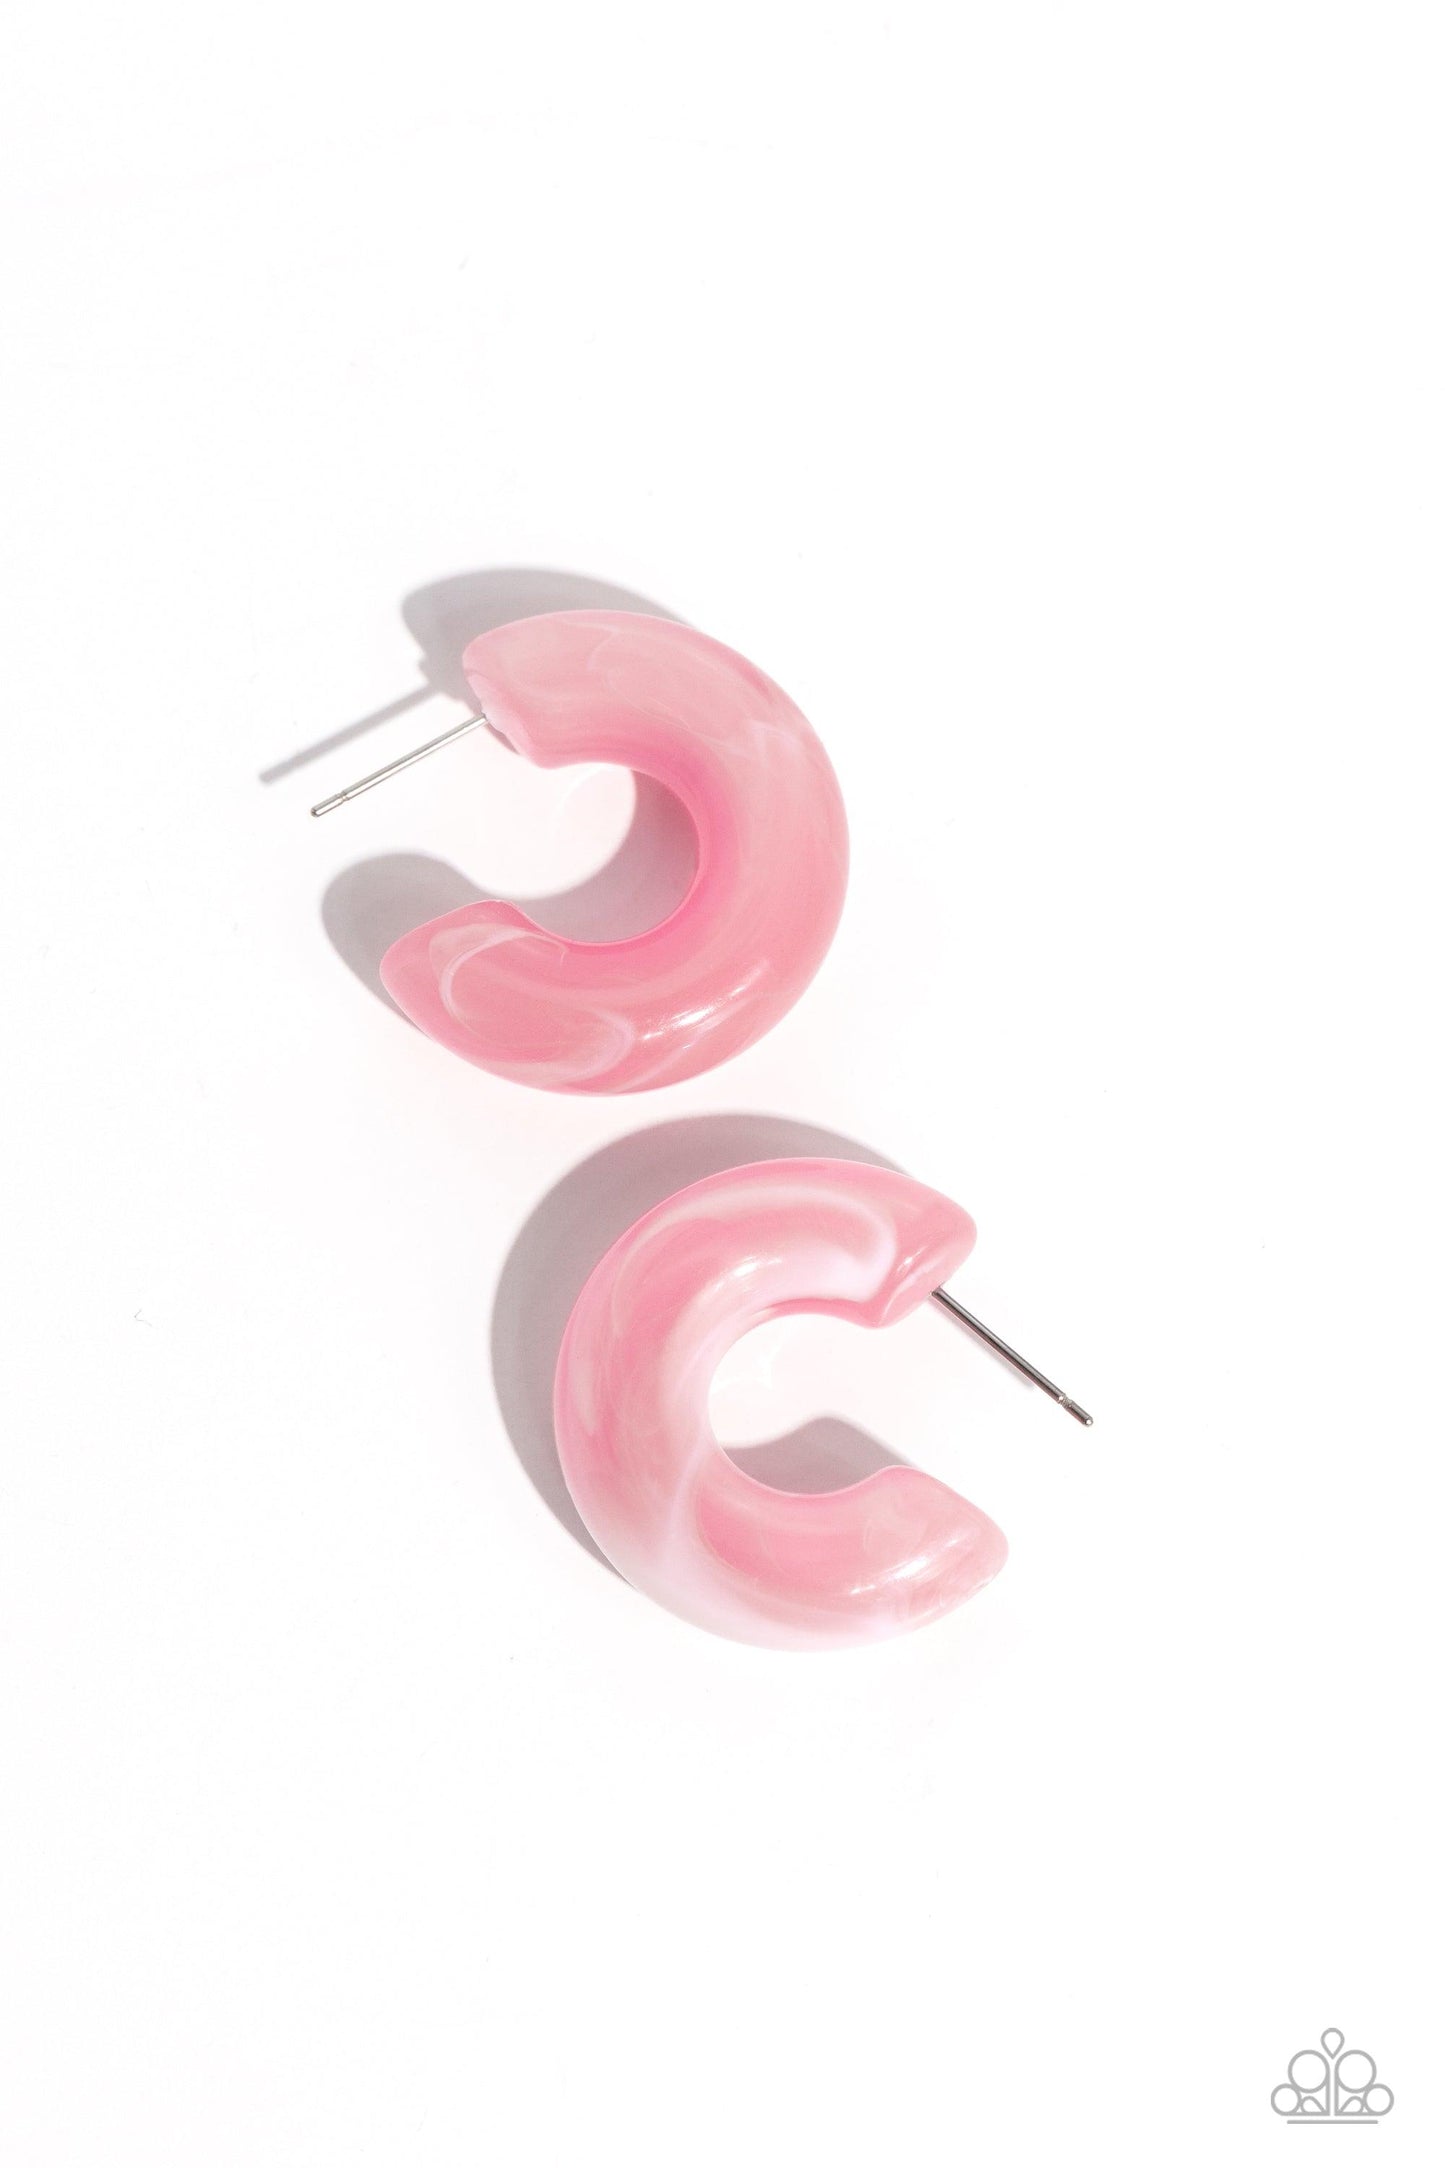 Paparazzi Accessories - Acrylic Acclaim - Pink Hoop Earrings - Bling by JessieK